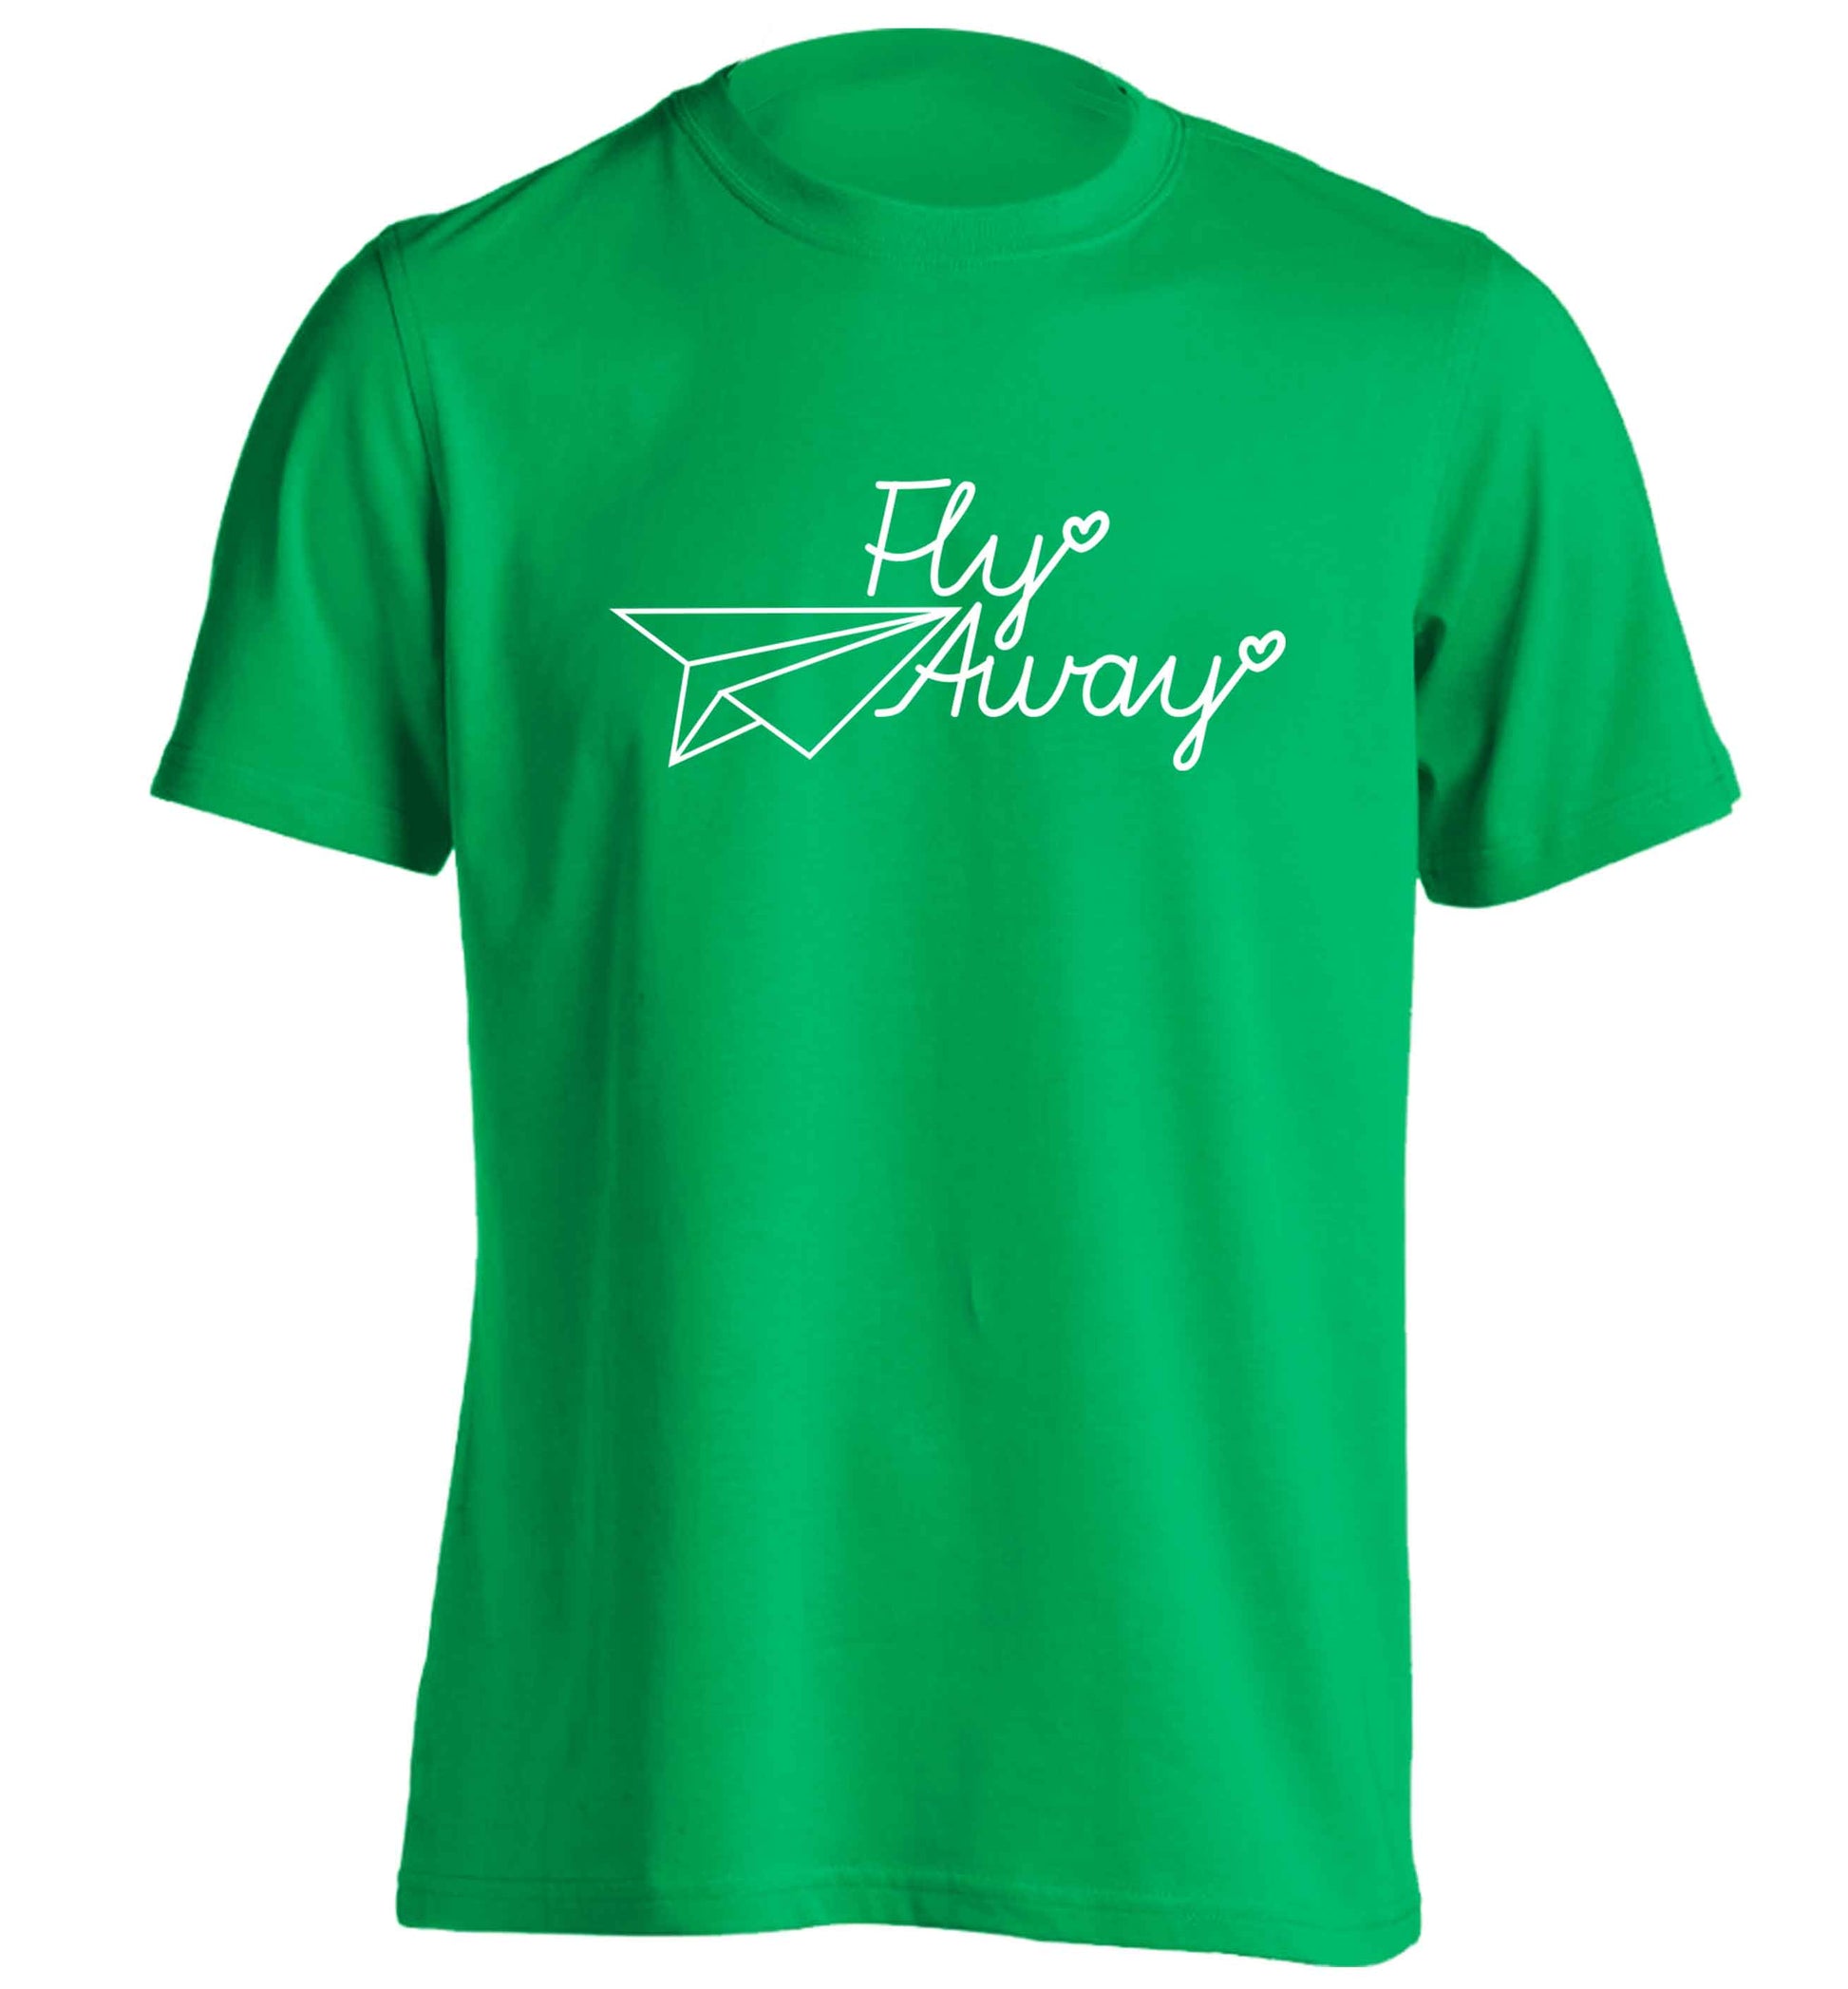 Fly away adults unisex green Tshirt 2XL